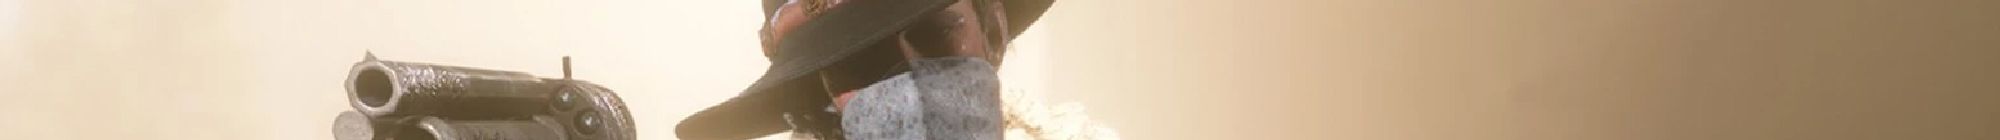 a cowboy with a bandana covering their face aims a revolver